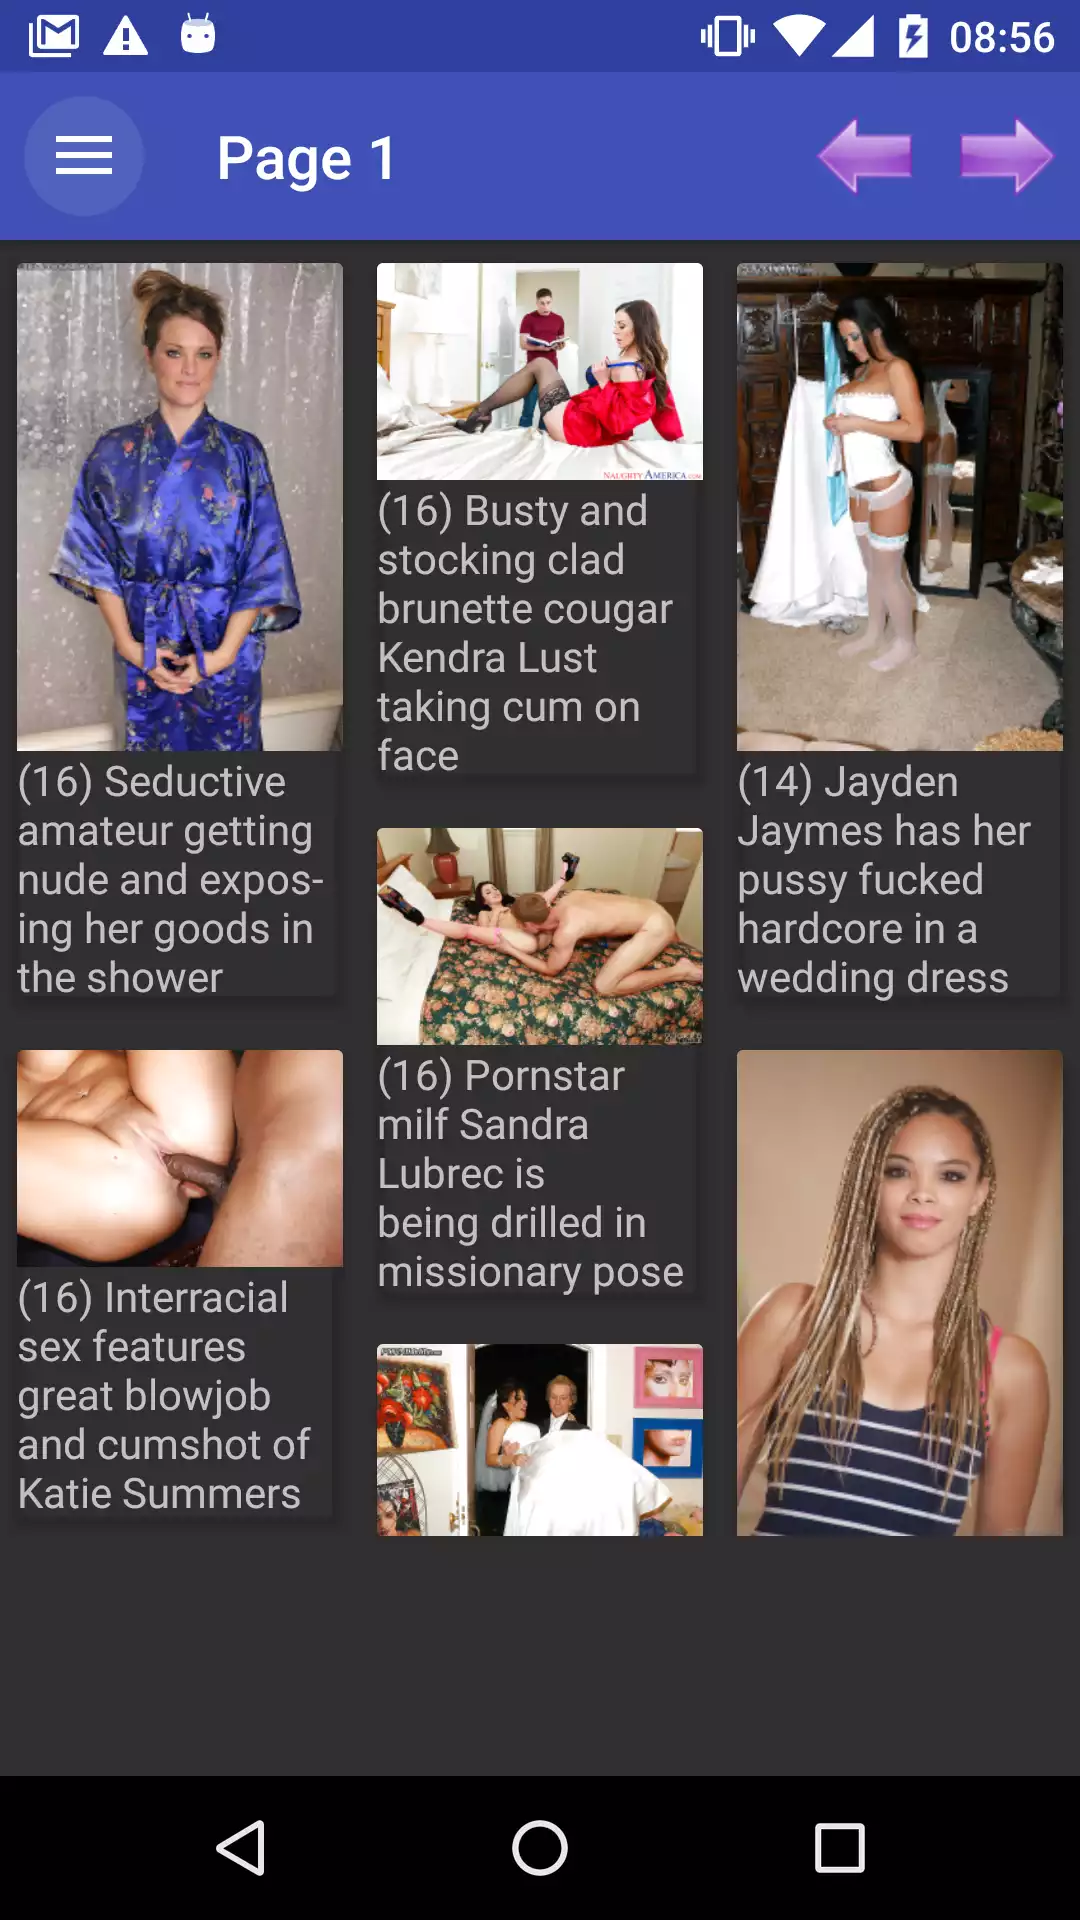 Piercing Galleries download,ios,time,mythras,punishment,new,photos,wallpapers,app,galleries,henti,pornstar,futanari,apk,photo,hentai,femboy,porn,gallary,mature,sexy,lair,gallery,wallpaper